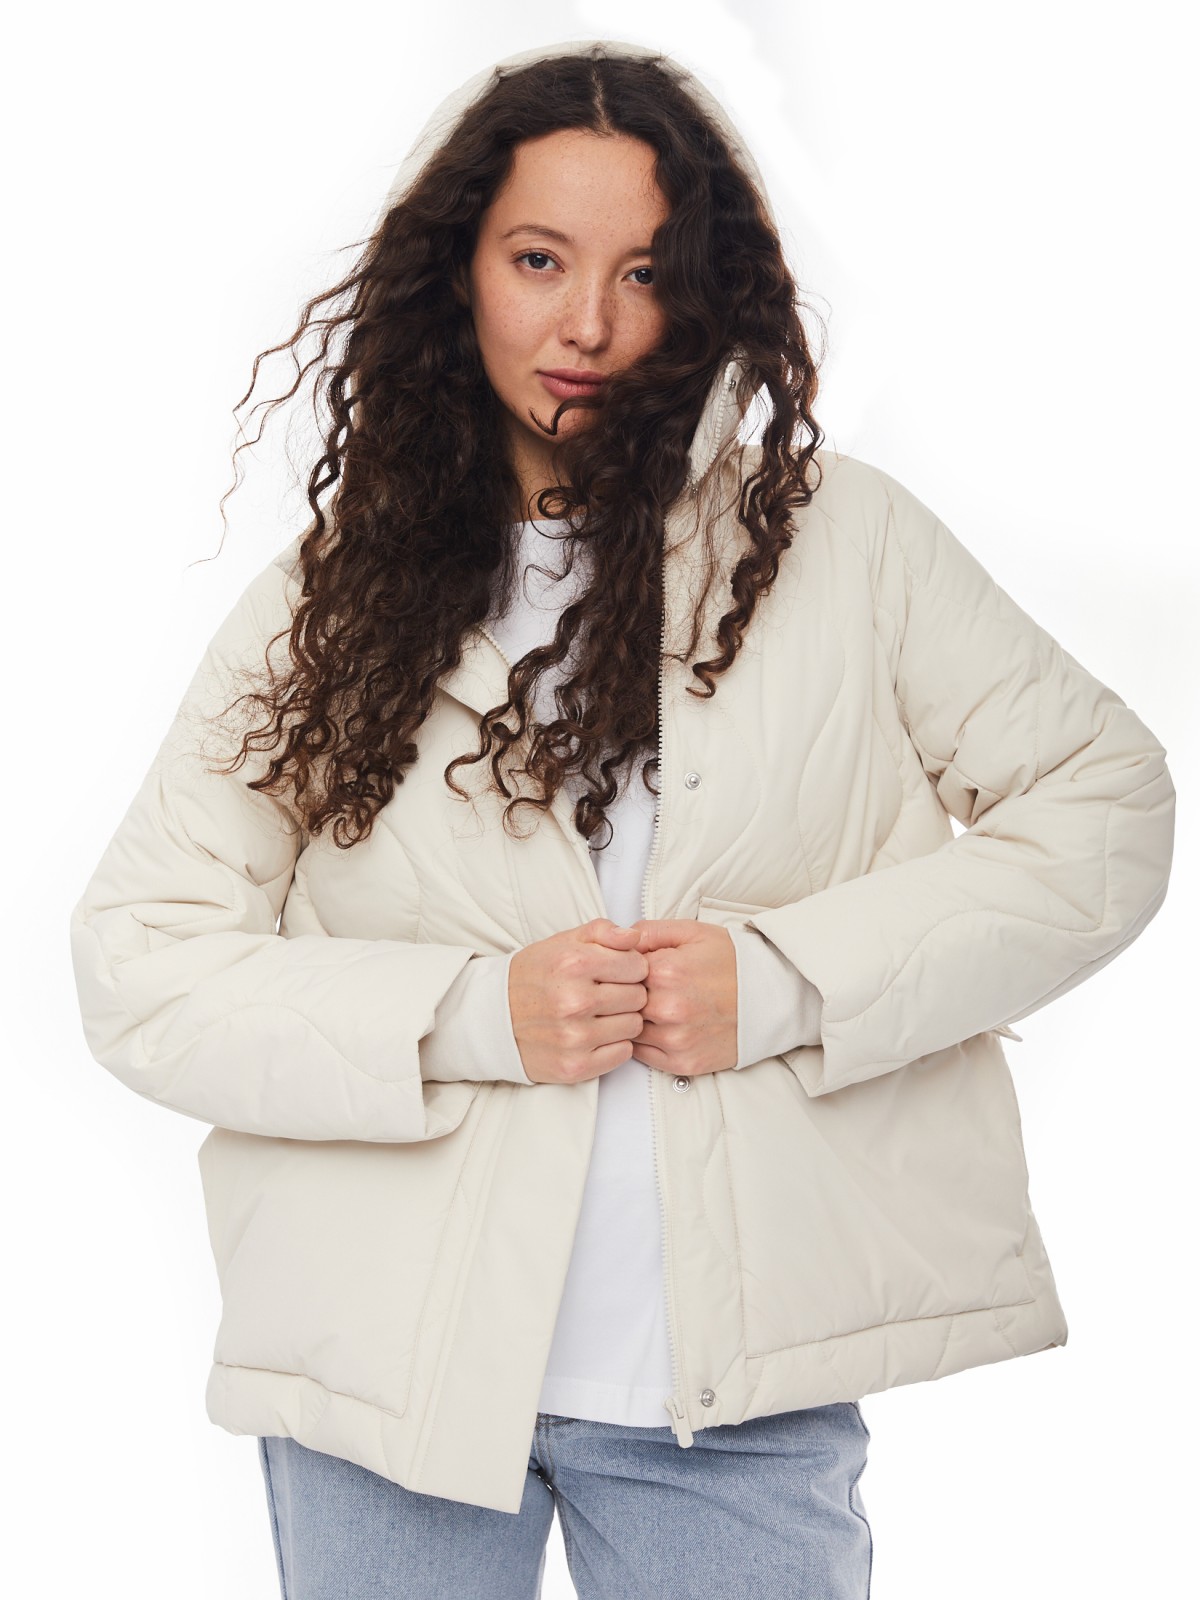 Тёплая дутая куртка оверсайз силуэта с капюшоном zolla 024125112424, цвет молоко, размер XS - фото 1